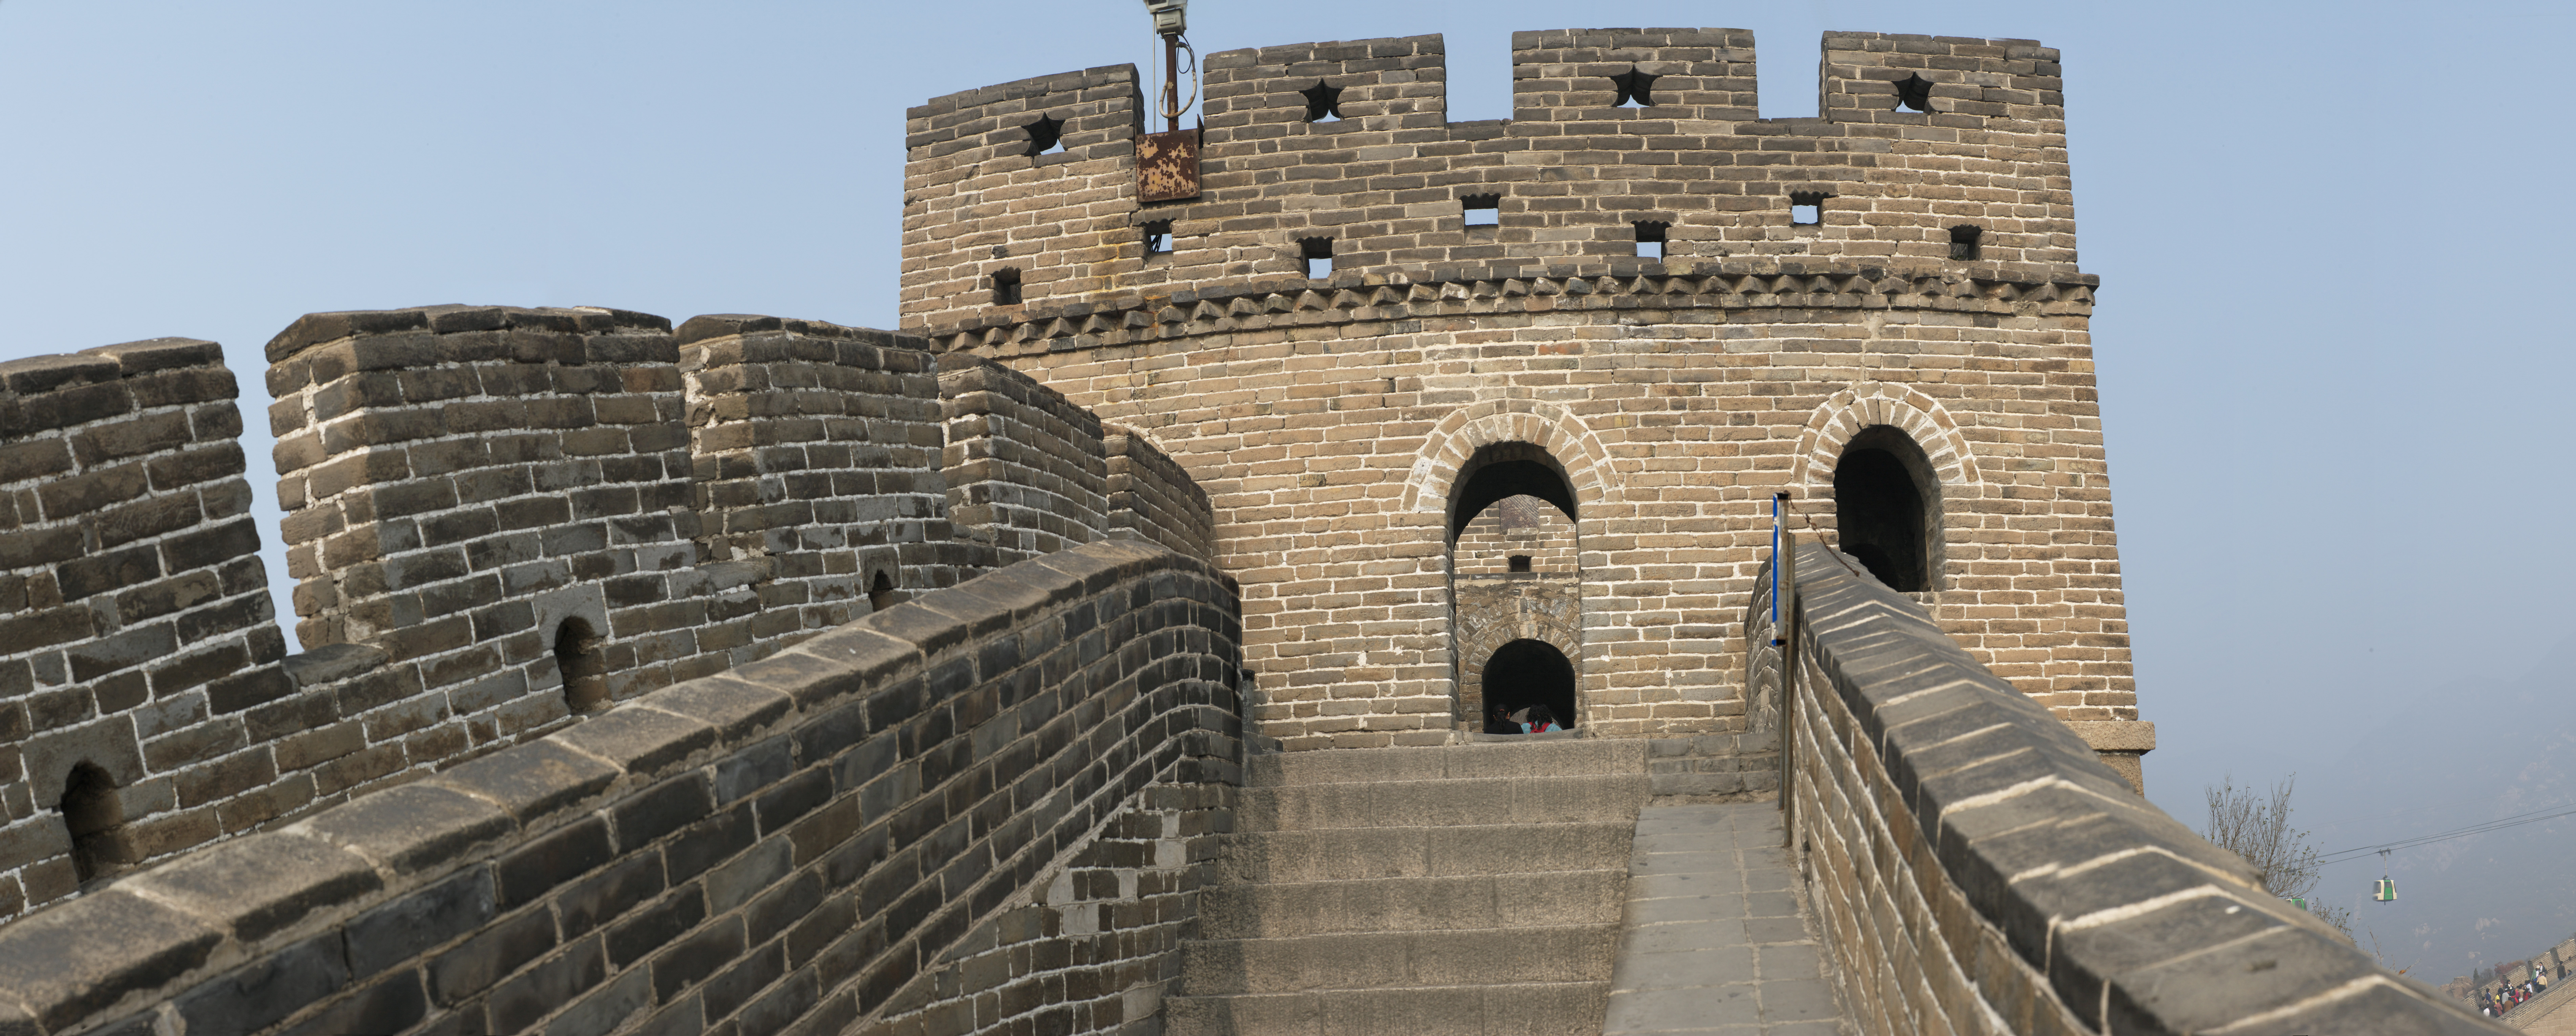 fotografia, material, livra, ajardine, imagine, proveja fotografia,Great Wall Panorama, Paredes, Castelo de Lou, Xiongnu, Imperador Guangwu de Han